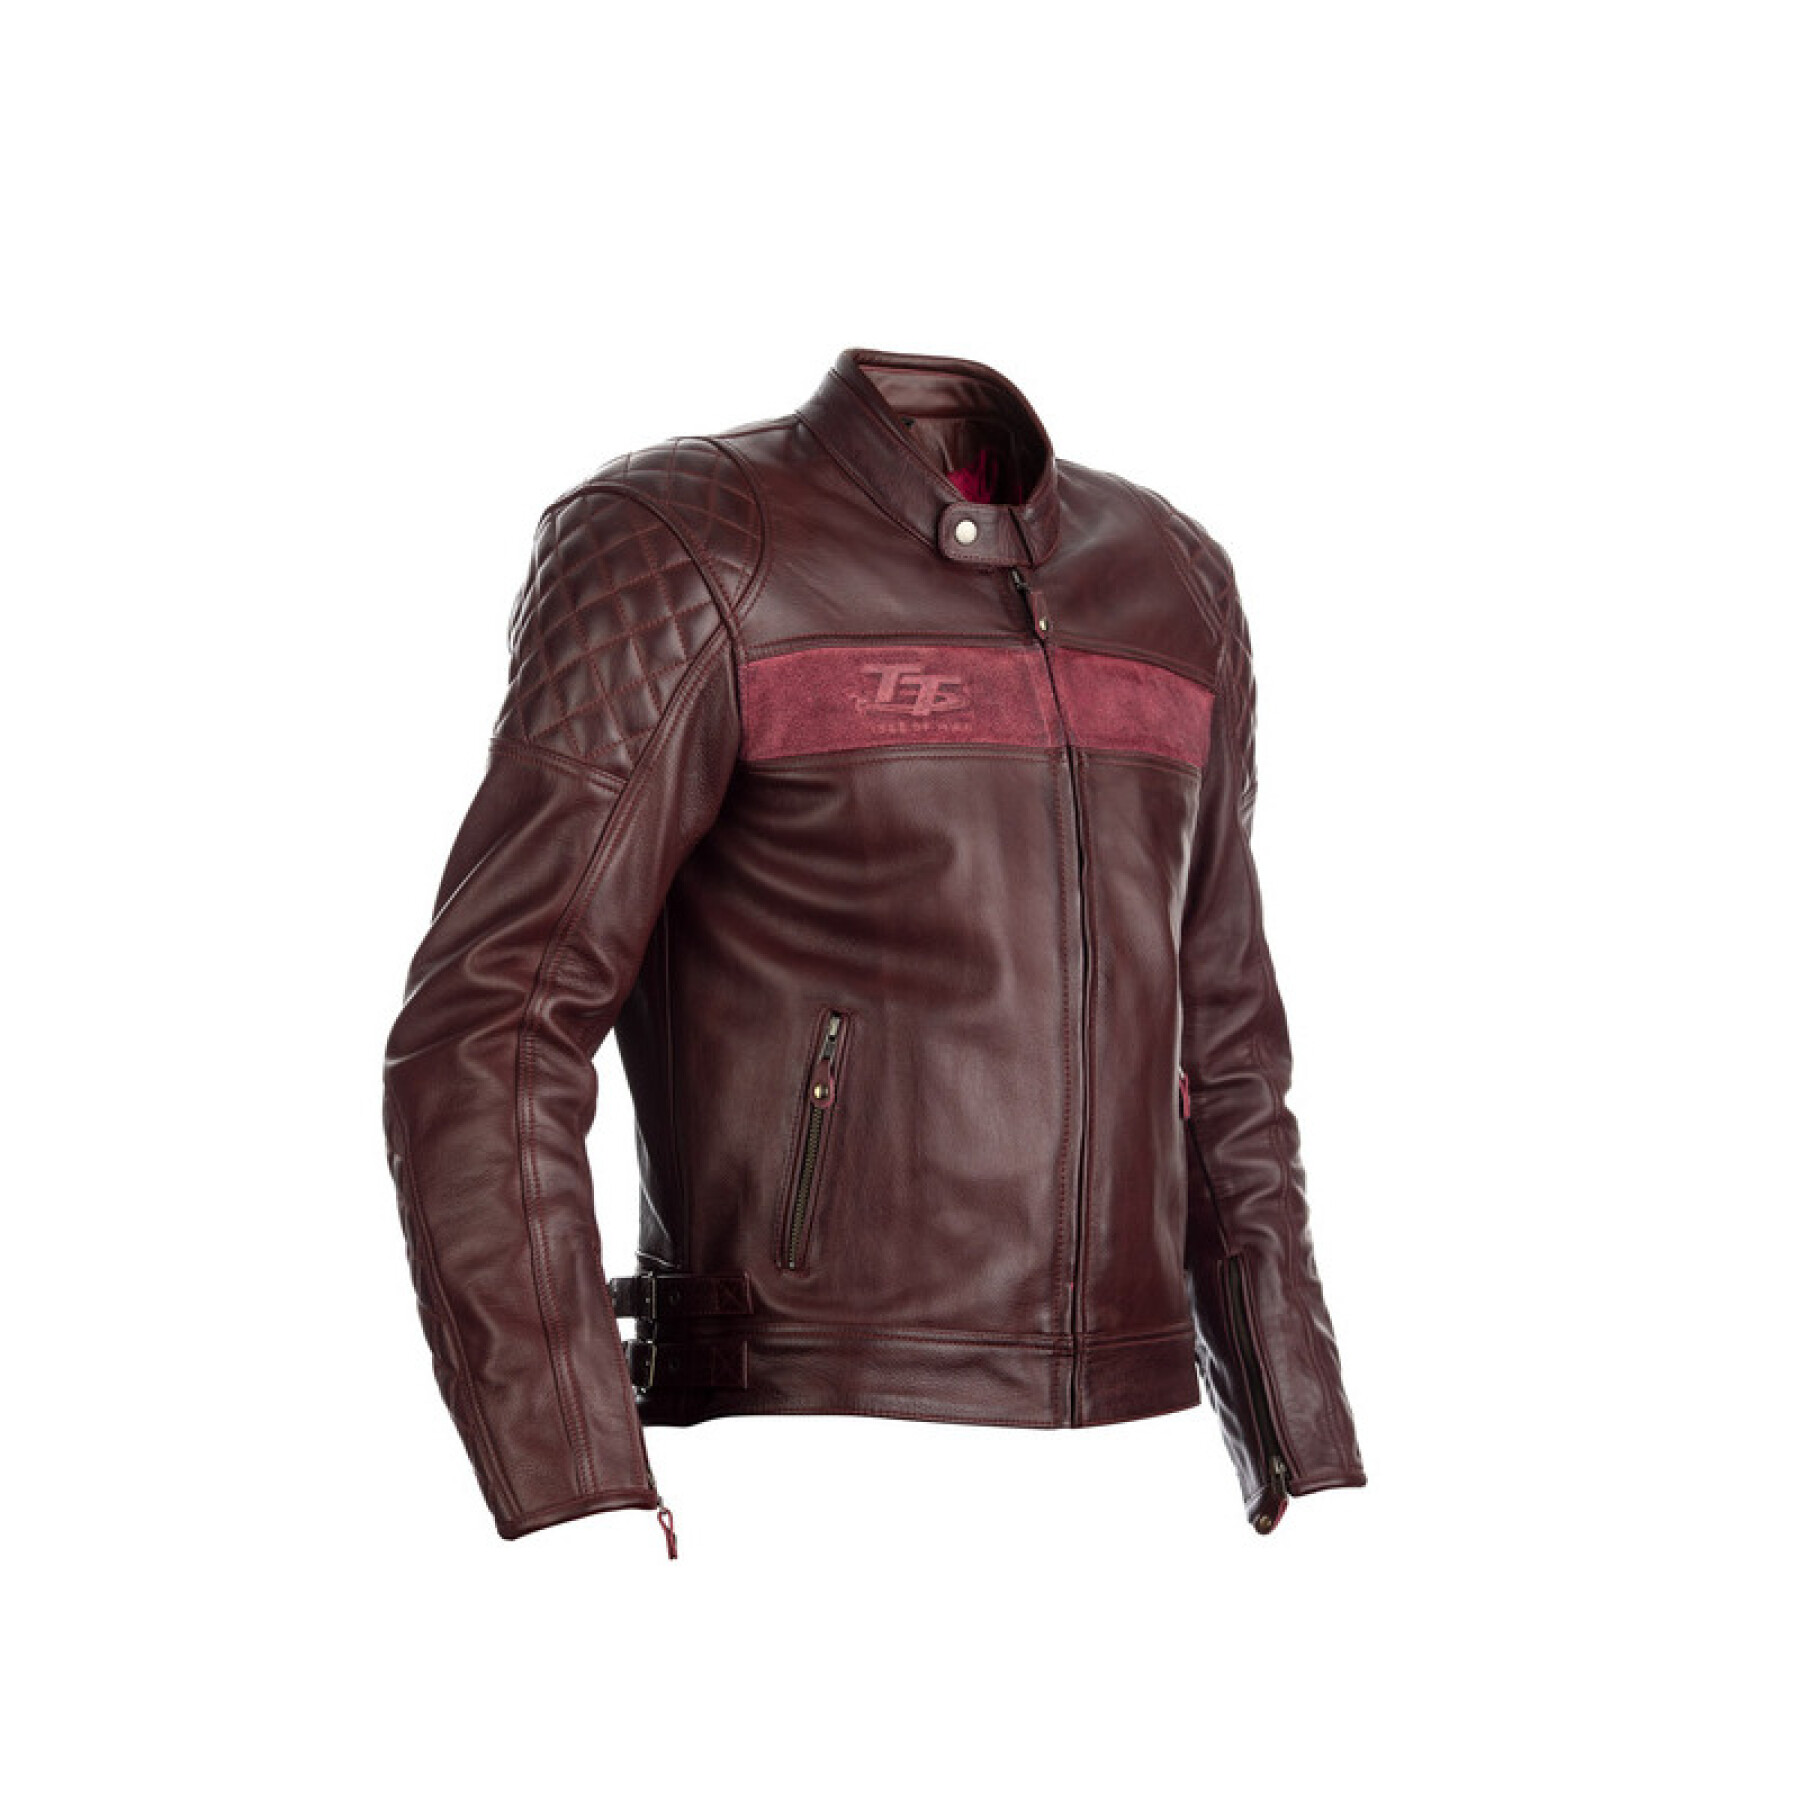 Leather motorcycle jacket RST Brandish